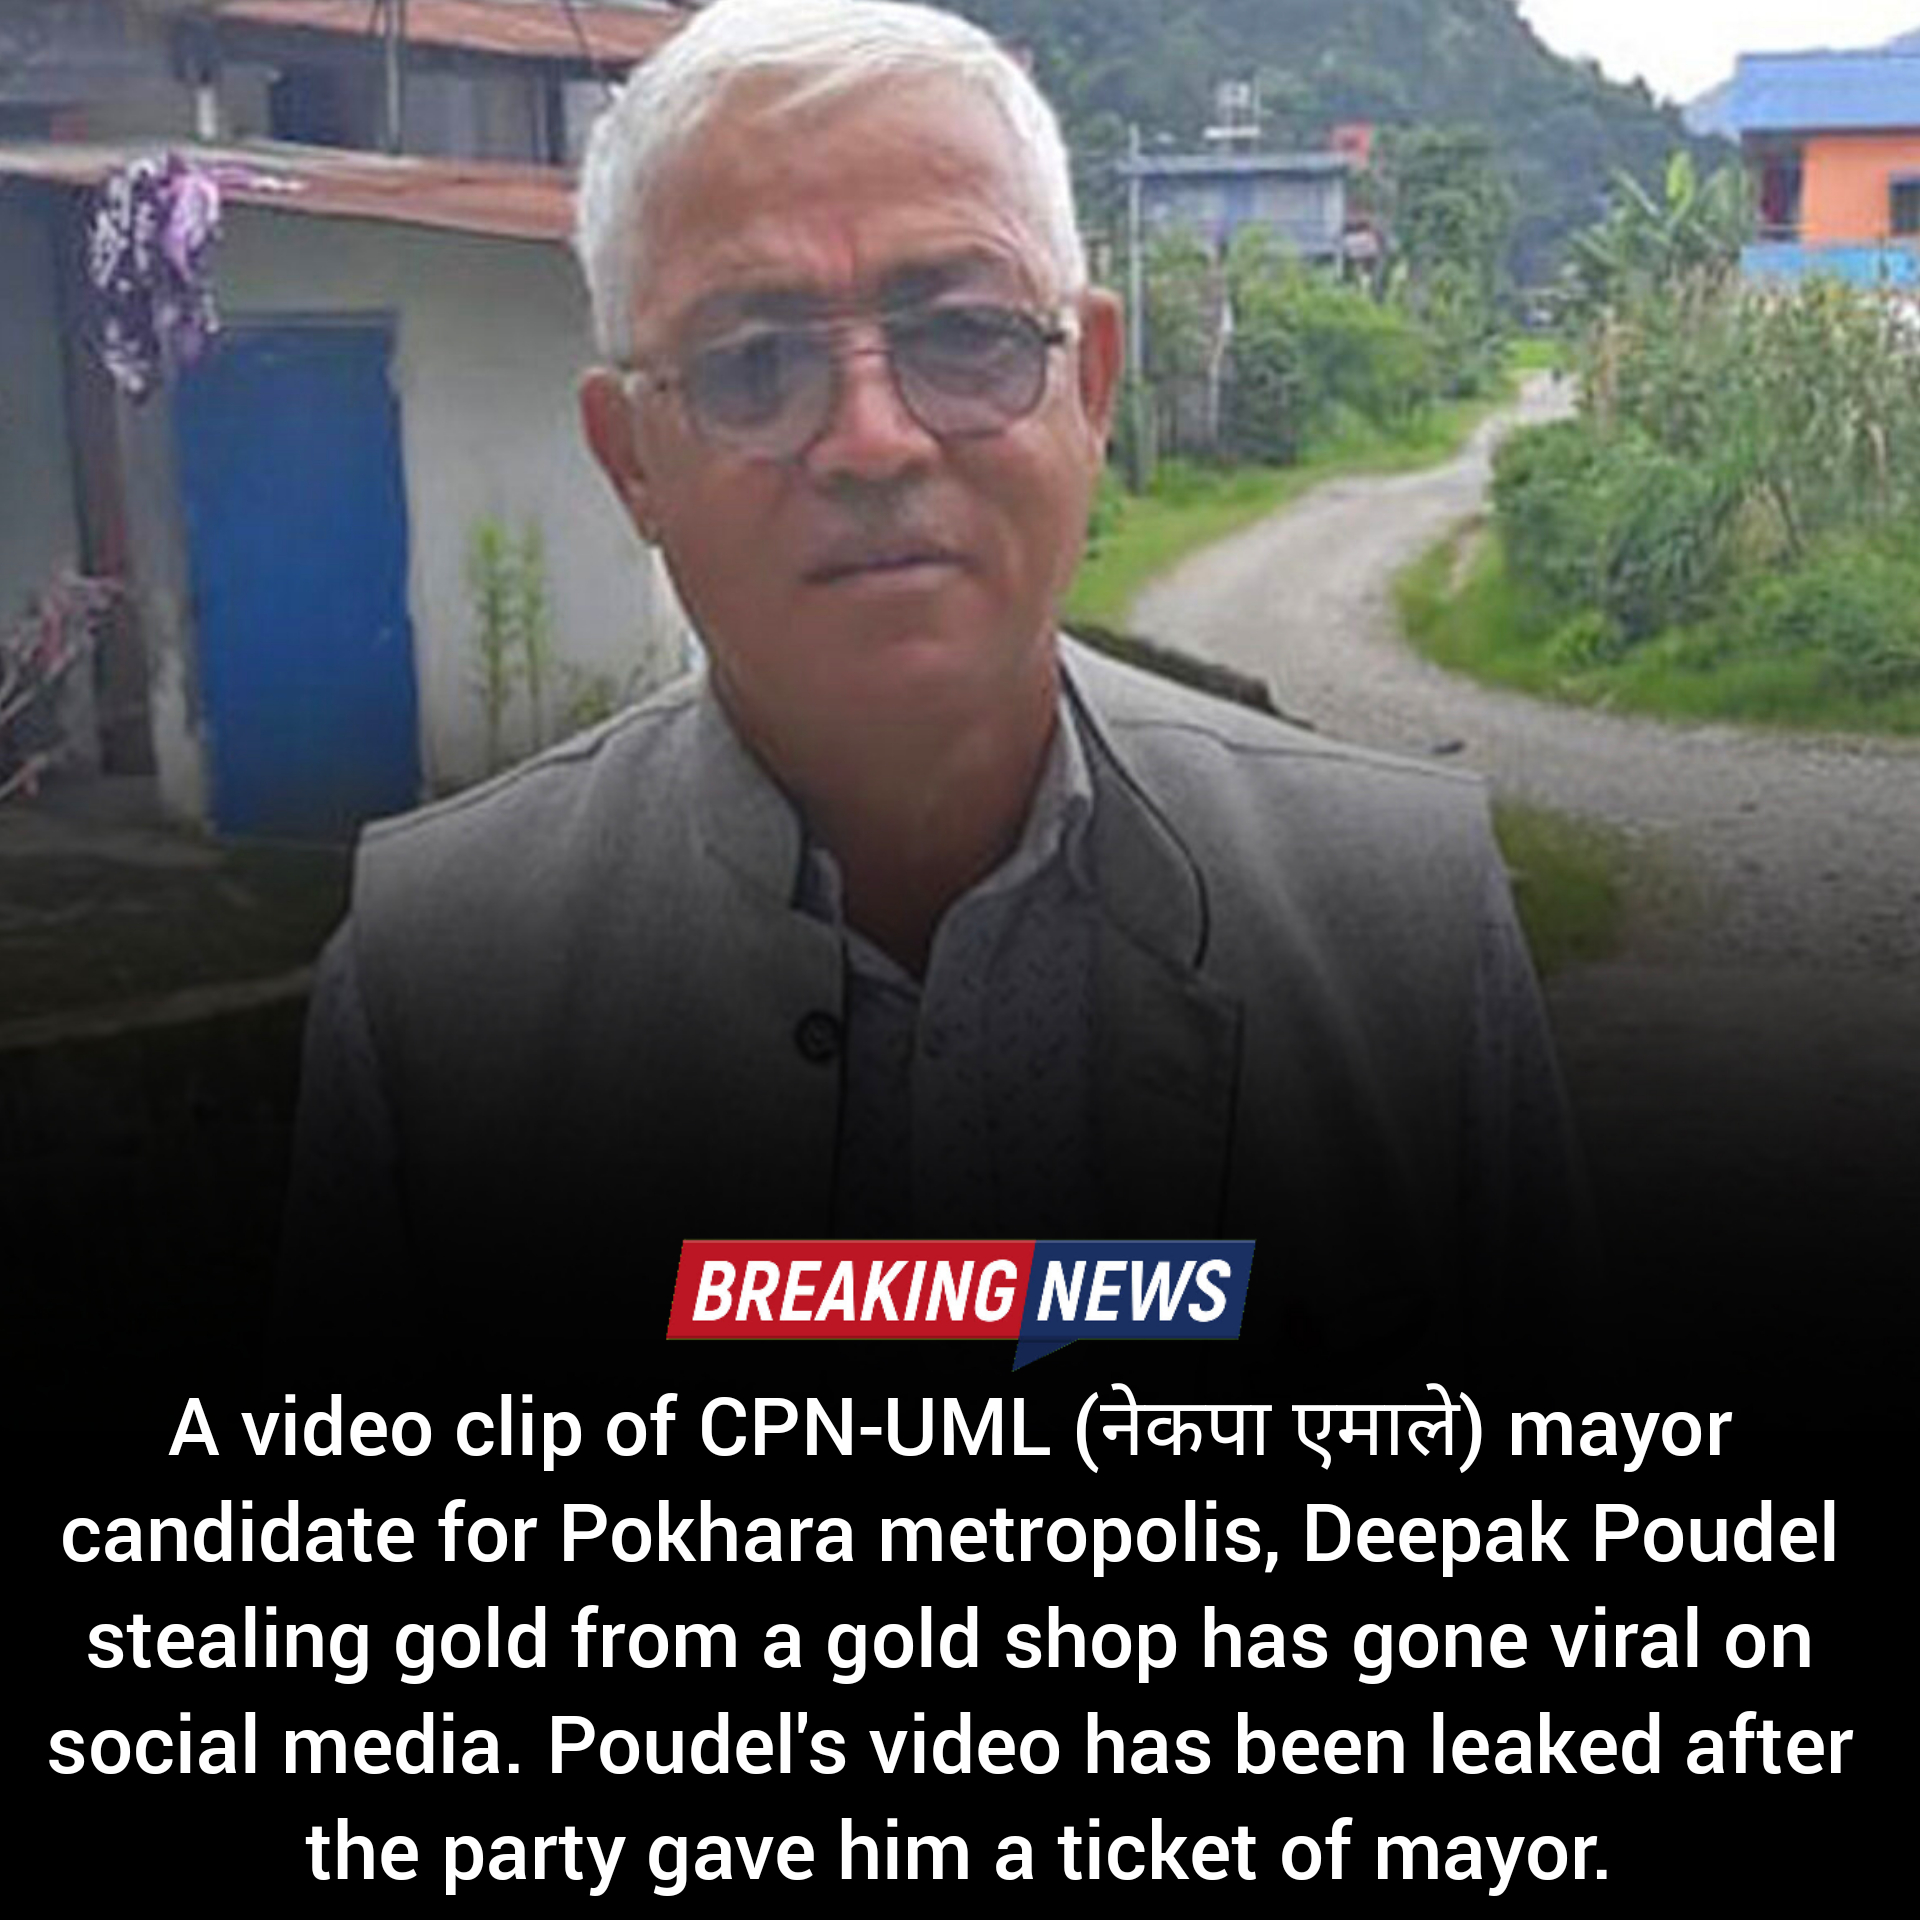 Pokhara metropolis mayor candidate Deepak Poudel’s gold stealing video gone viral